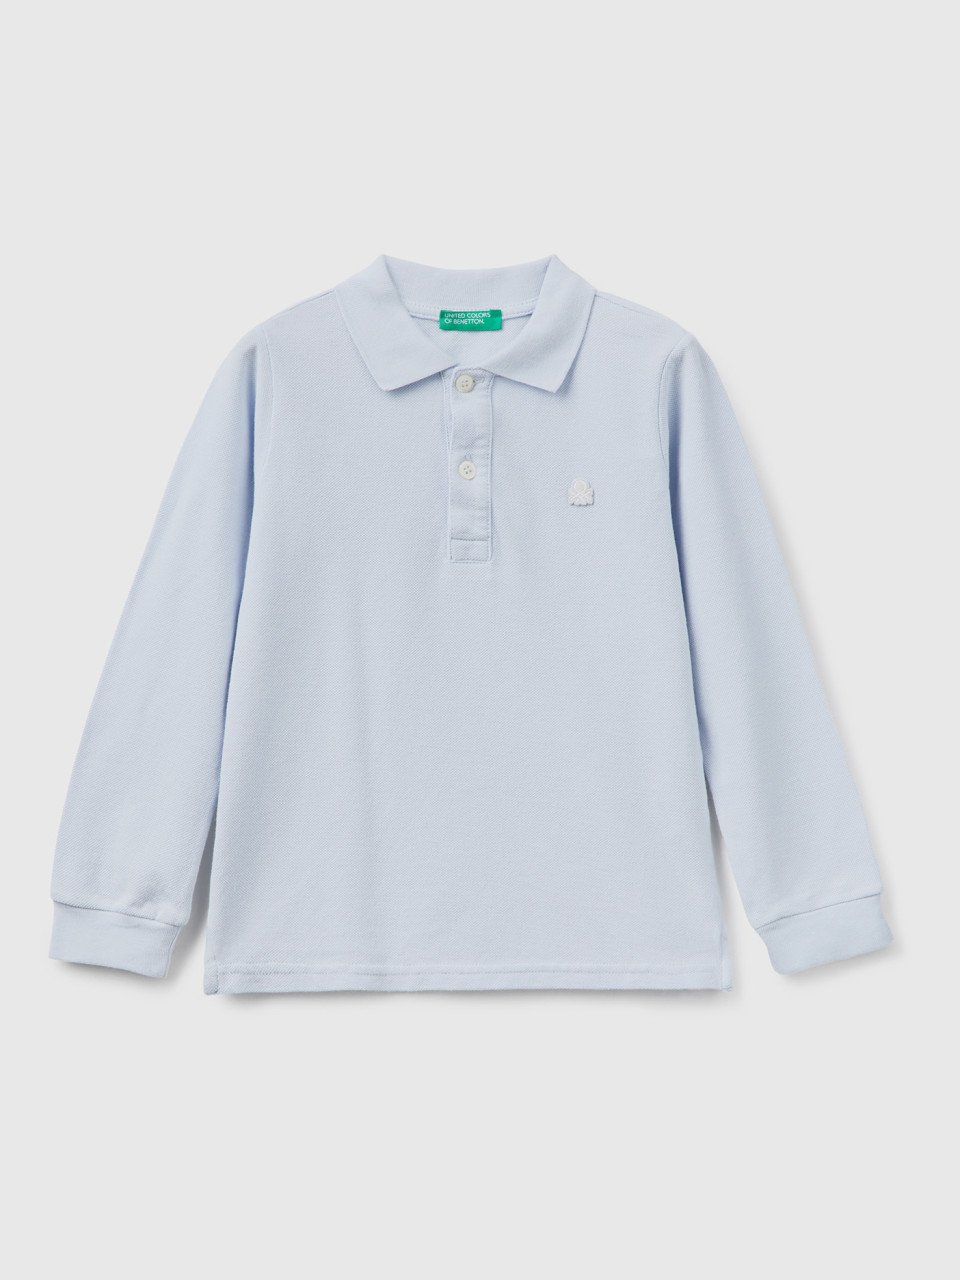 Benetton, Long Sleeve Polo In Organic Cotton, Sky Blue, Kids